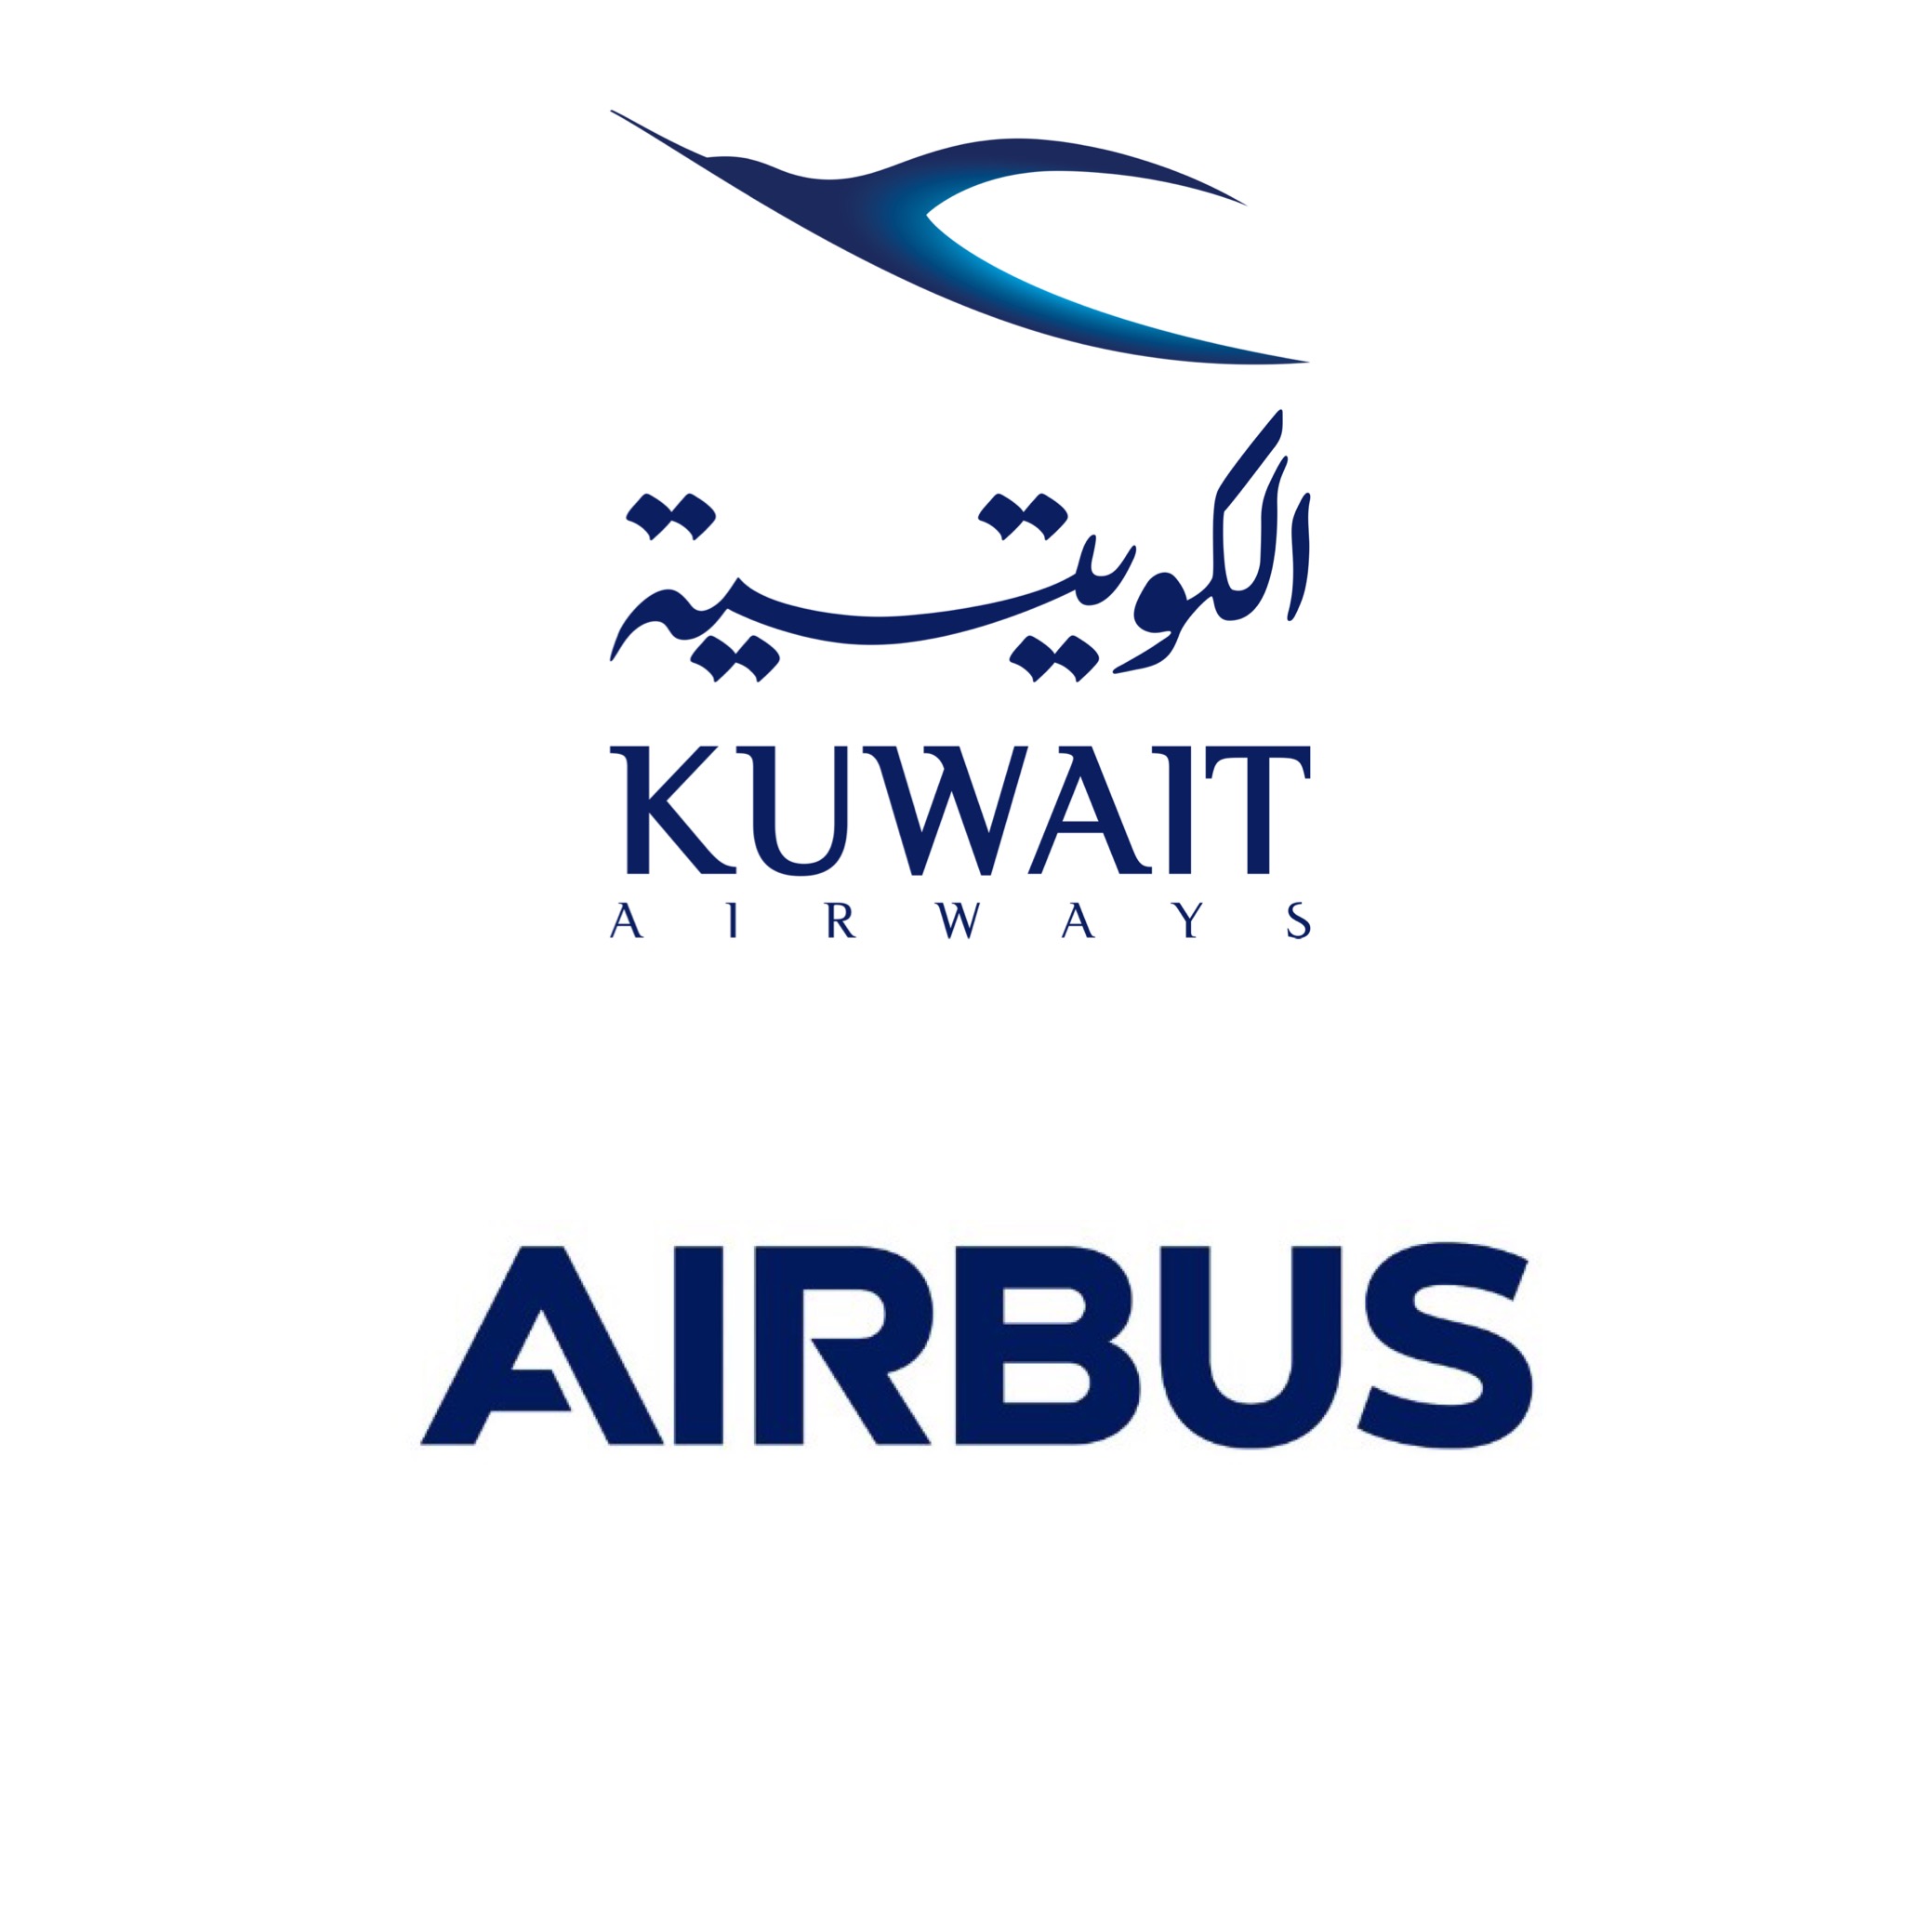 Kuwait Airways, Airbus.. 36 years of fruitful air transport cooperation                                                                                                                                                                                   